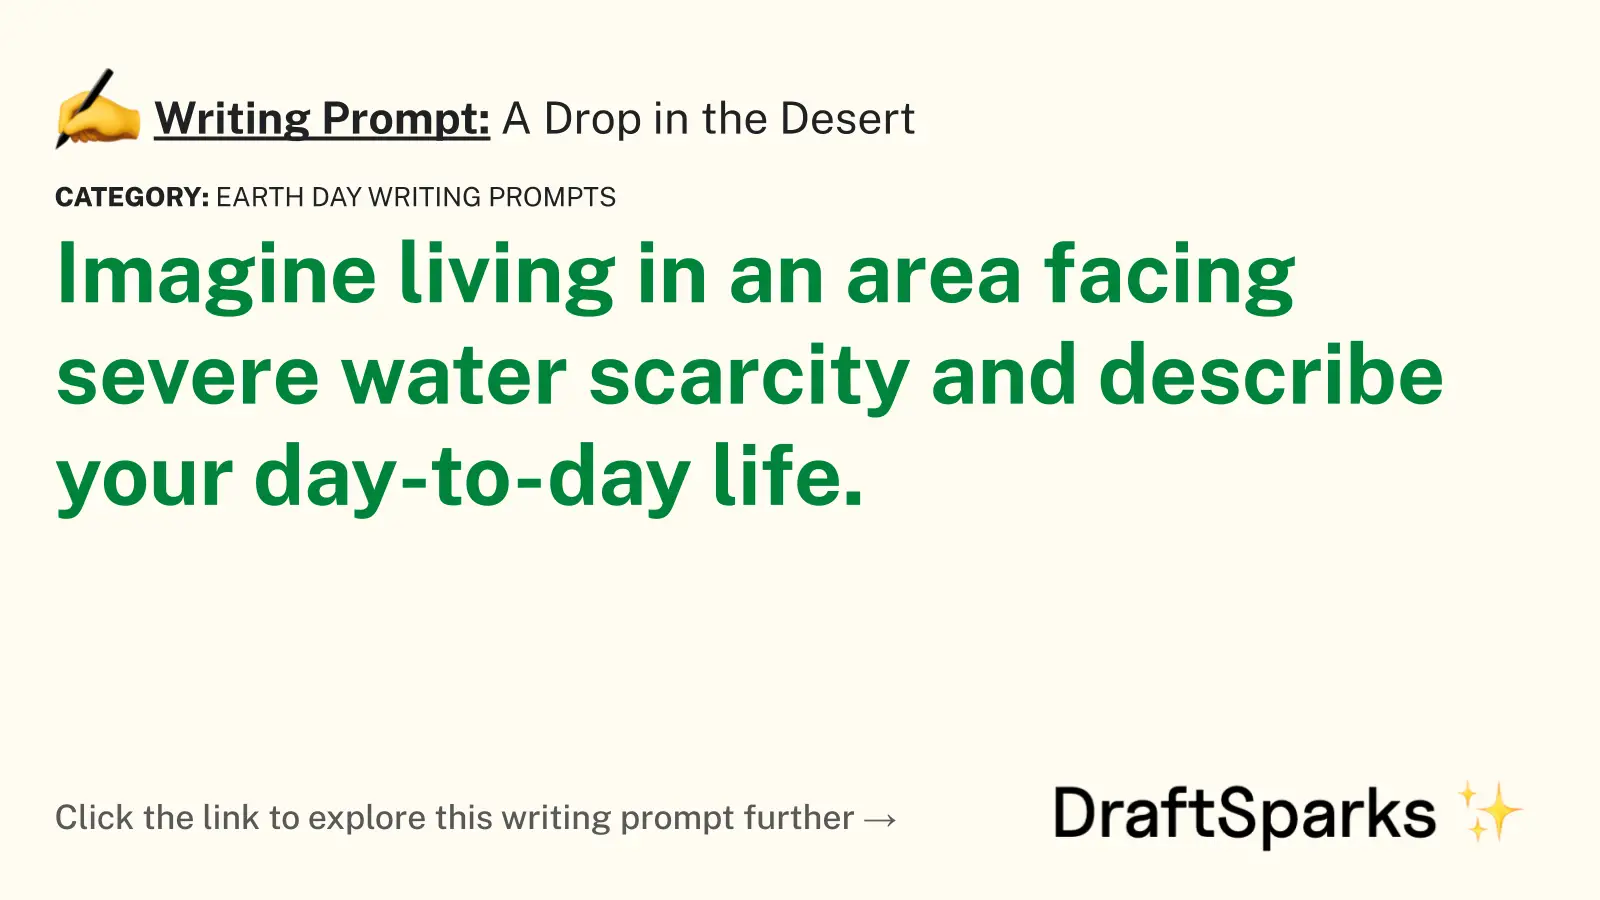 A Drop in the Desert